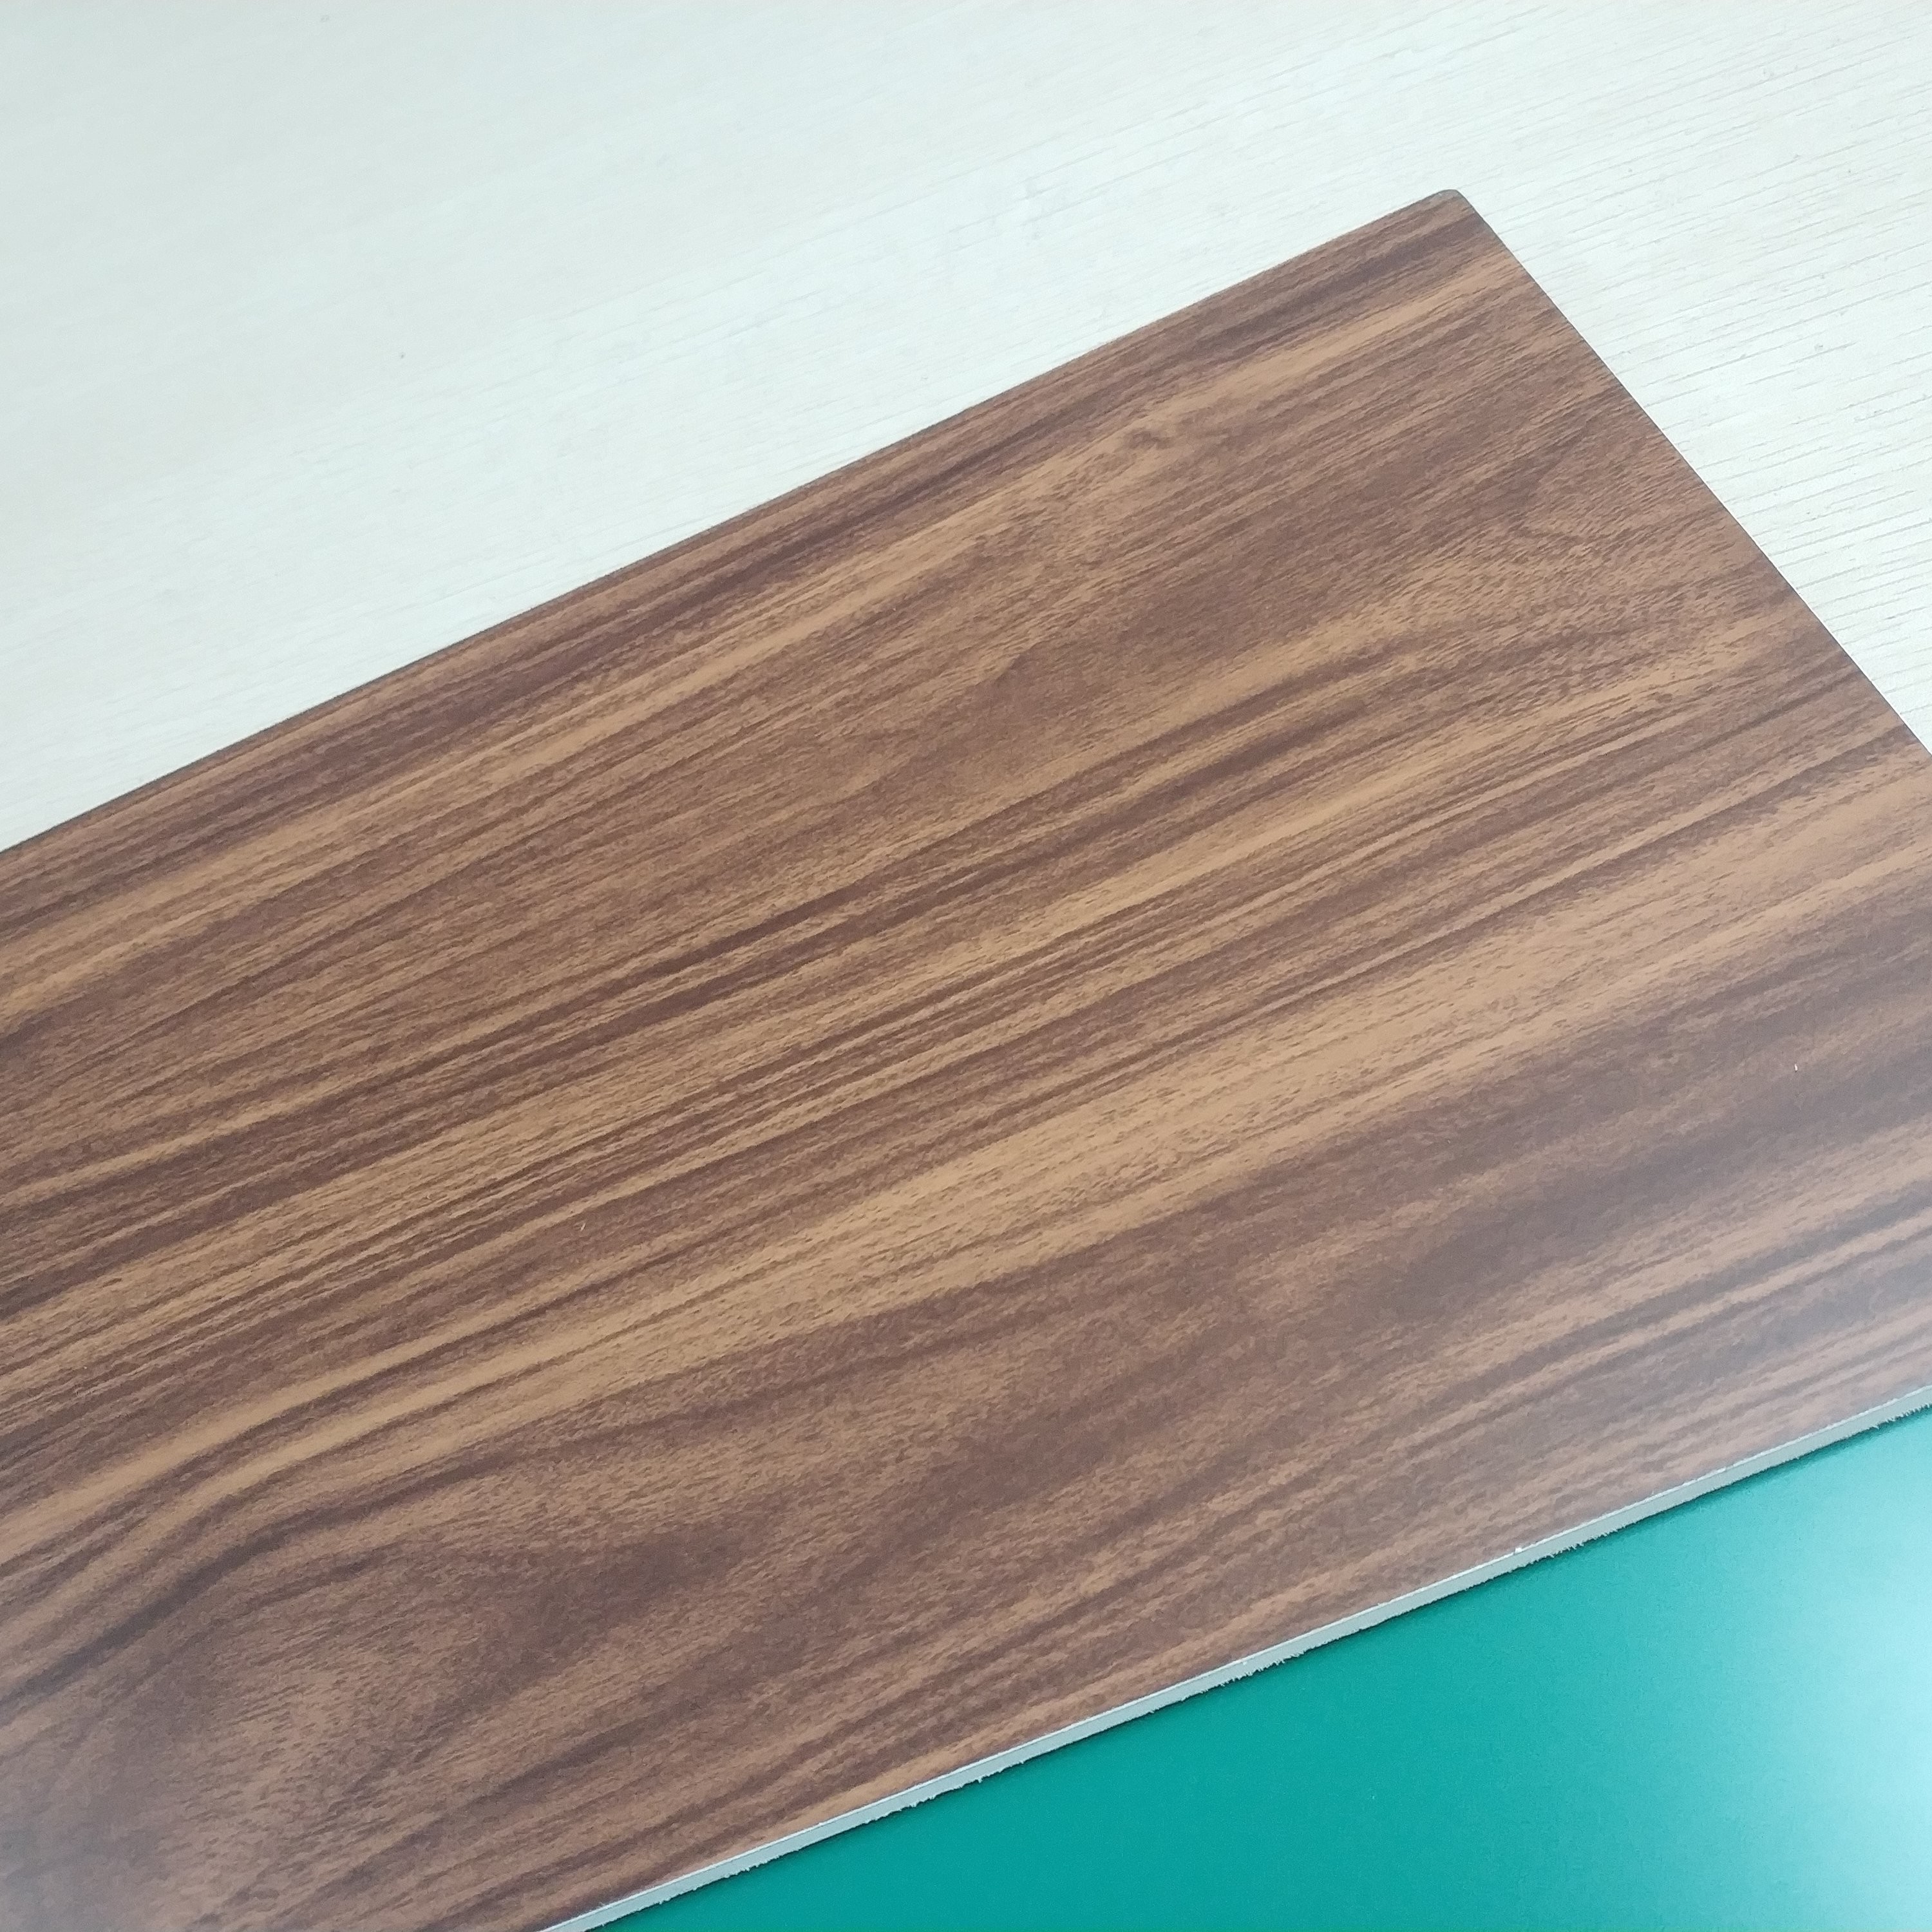 Buy cheap Wooden Wood Granite Aluminium Decorative Composite Panels , Alu Composite Panel from wholesalers